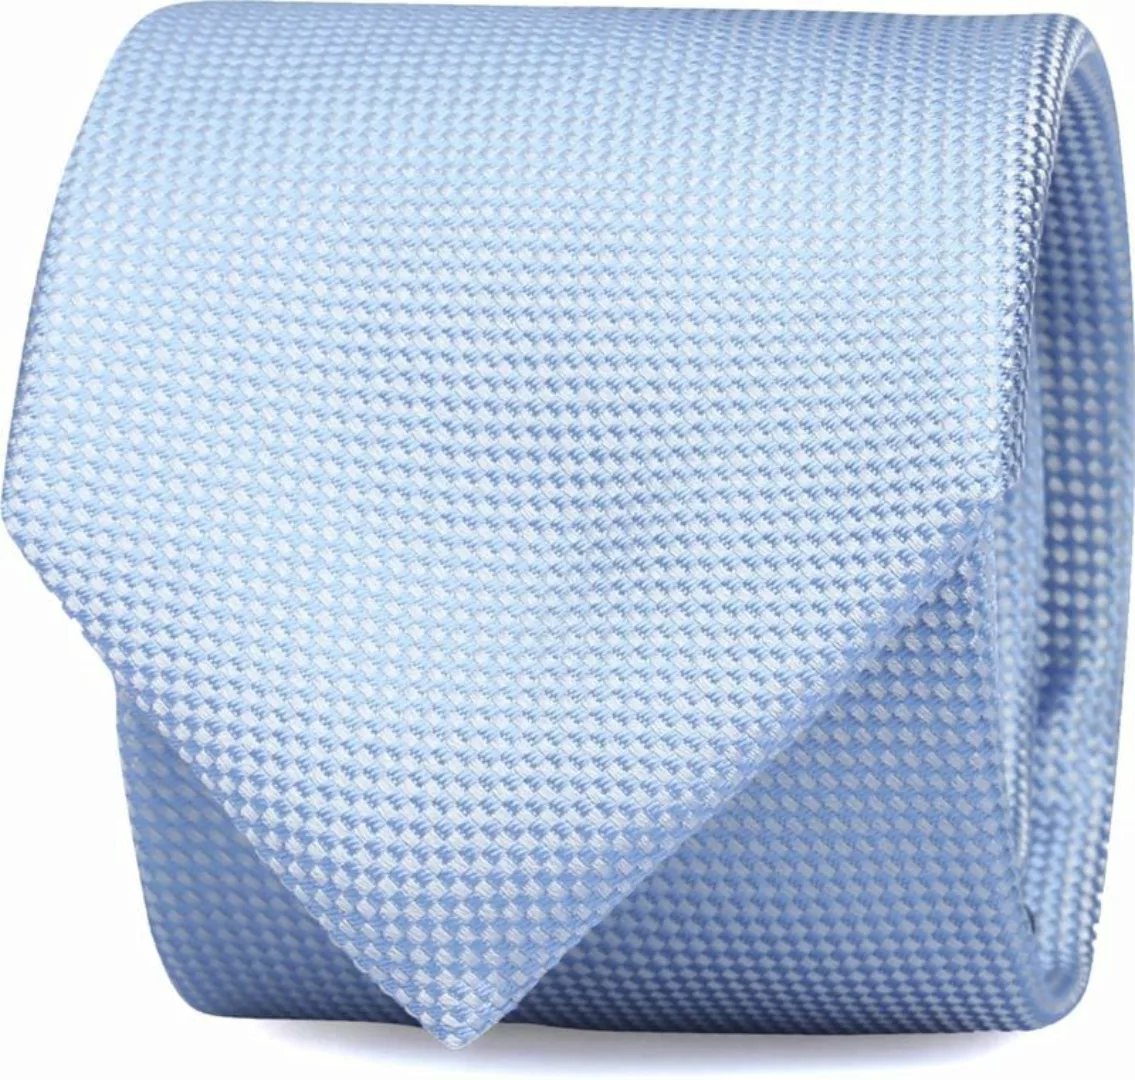 Suitable Seide Krawatte Hellblau - günstig online kaufen